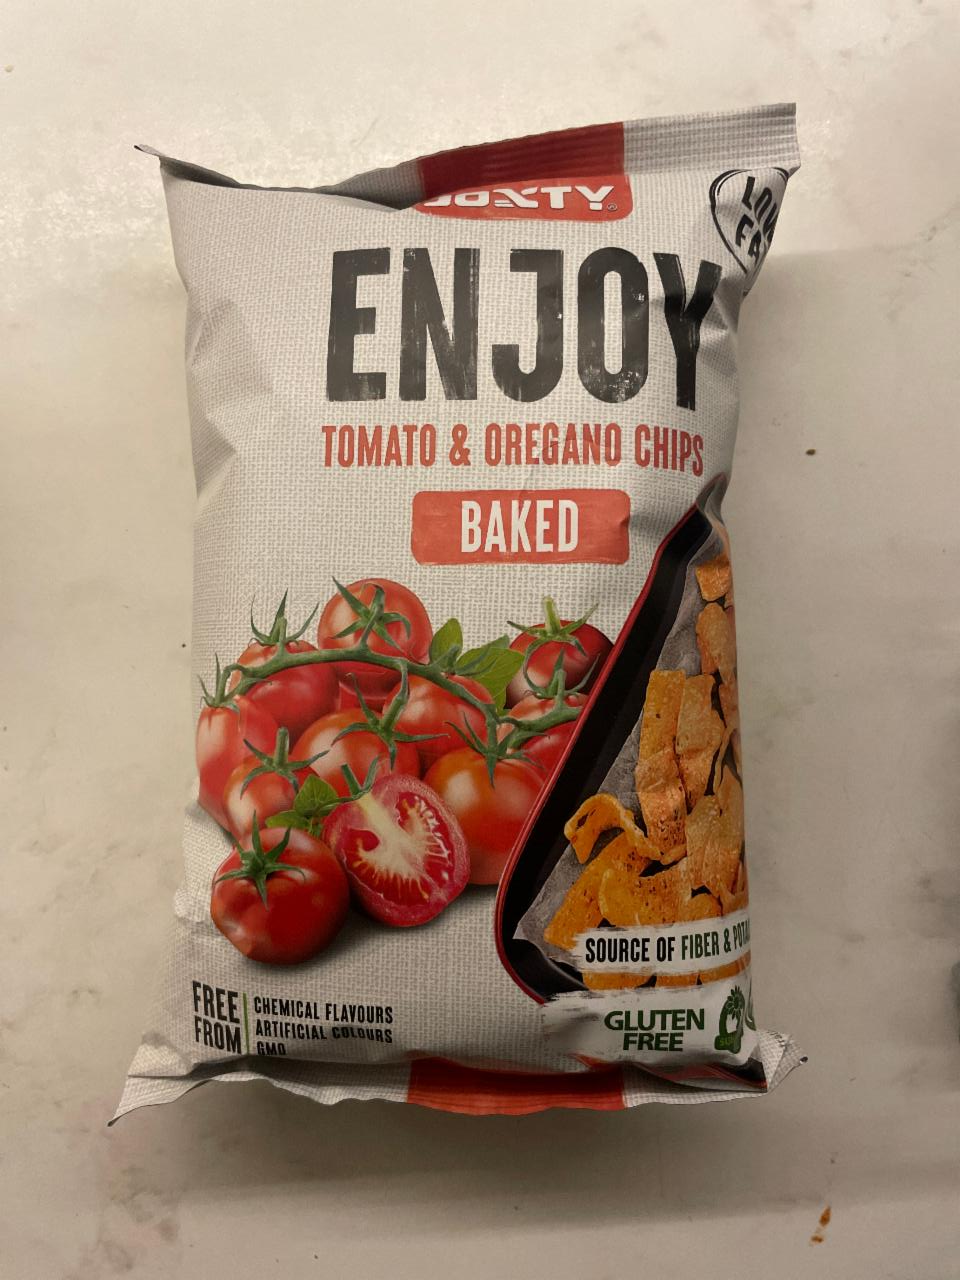 Fotografie - Chips Enjoy baked Tomato & Oregano Joxty